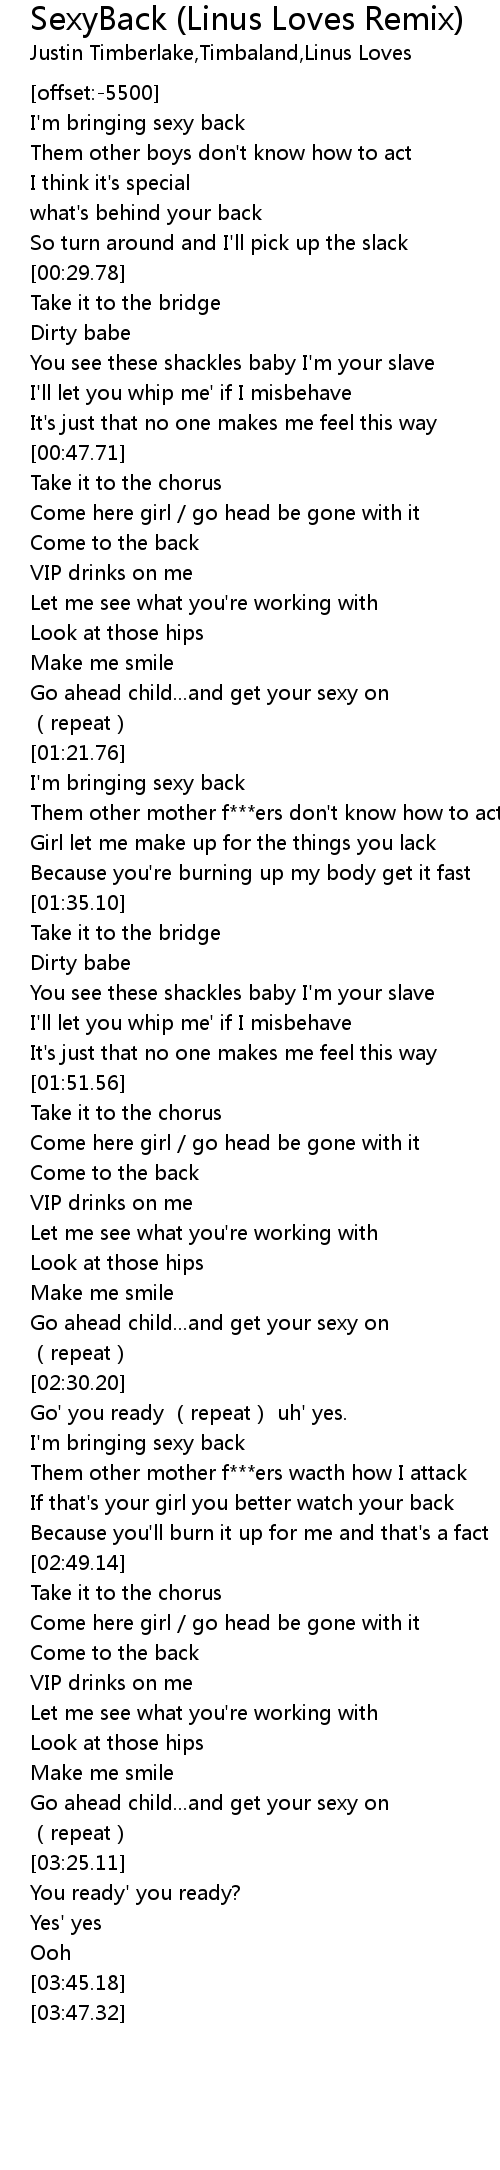 Sexy Back Dirty Lyrics Courteney Cox Cleavage